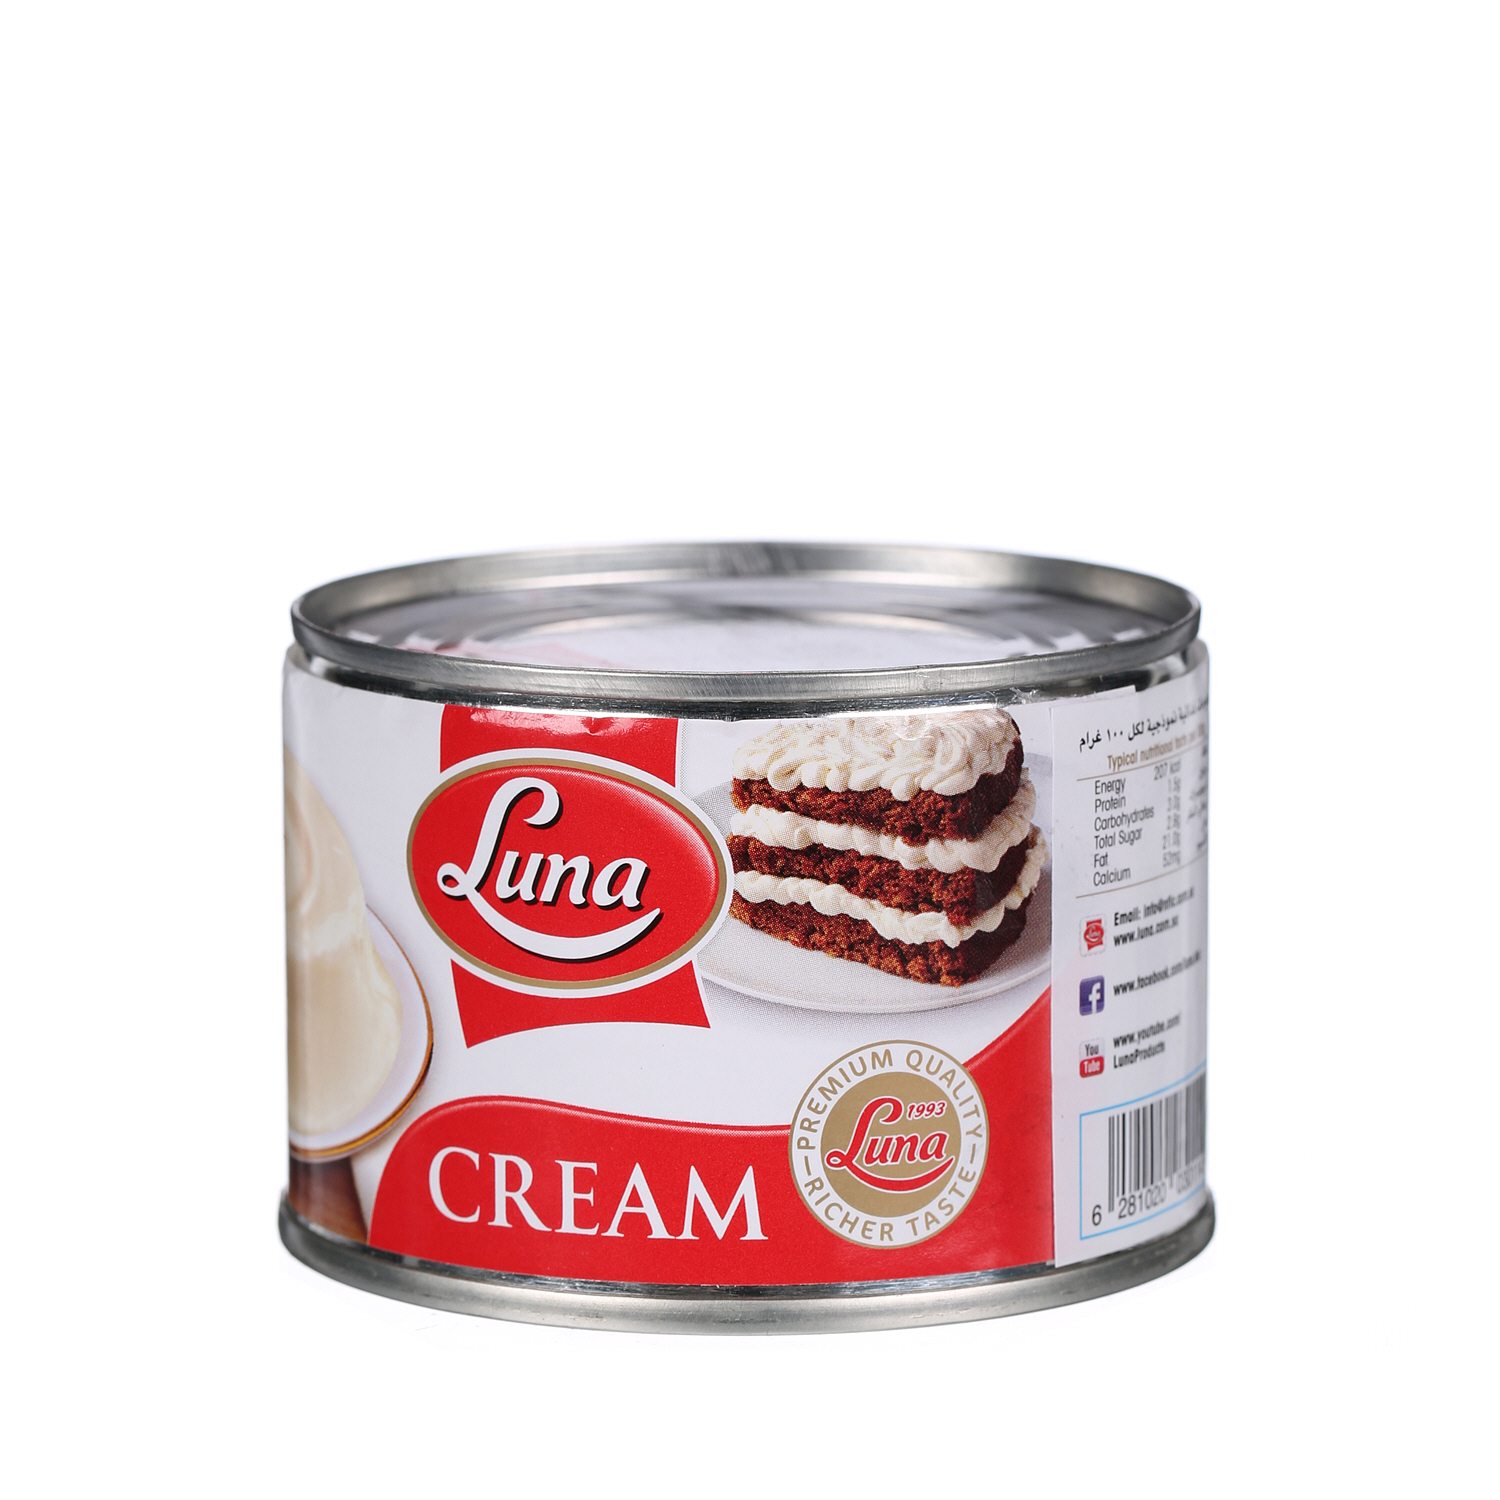 Luna Cream 155gm